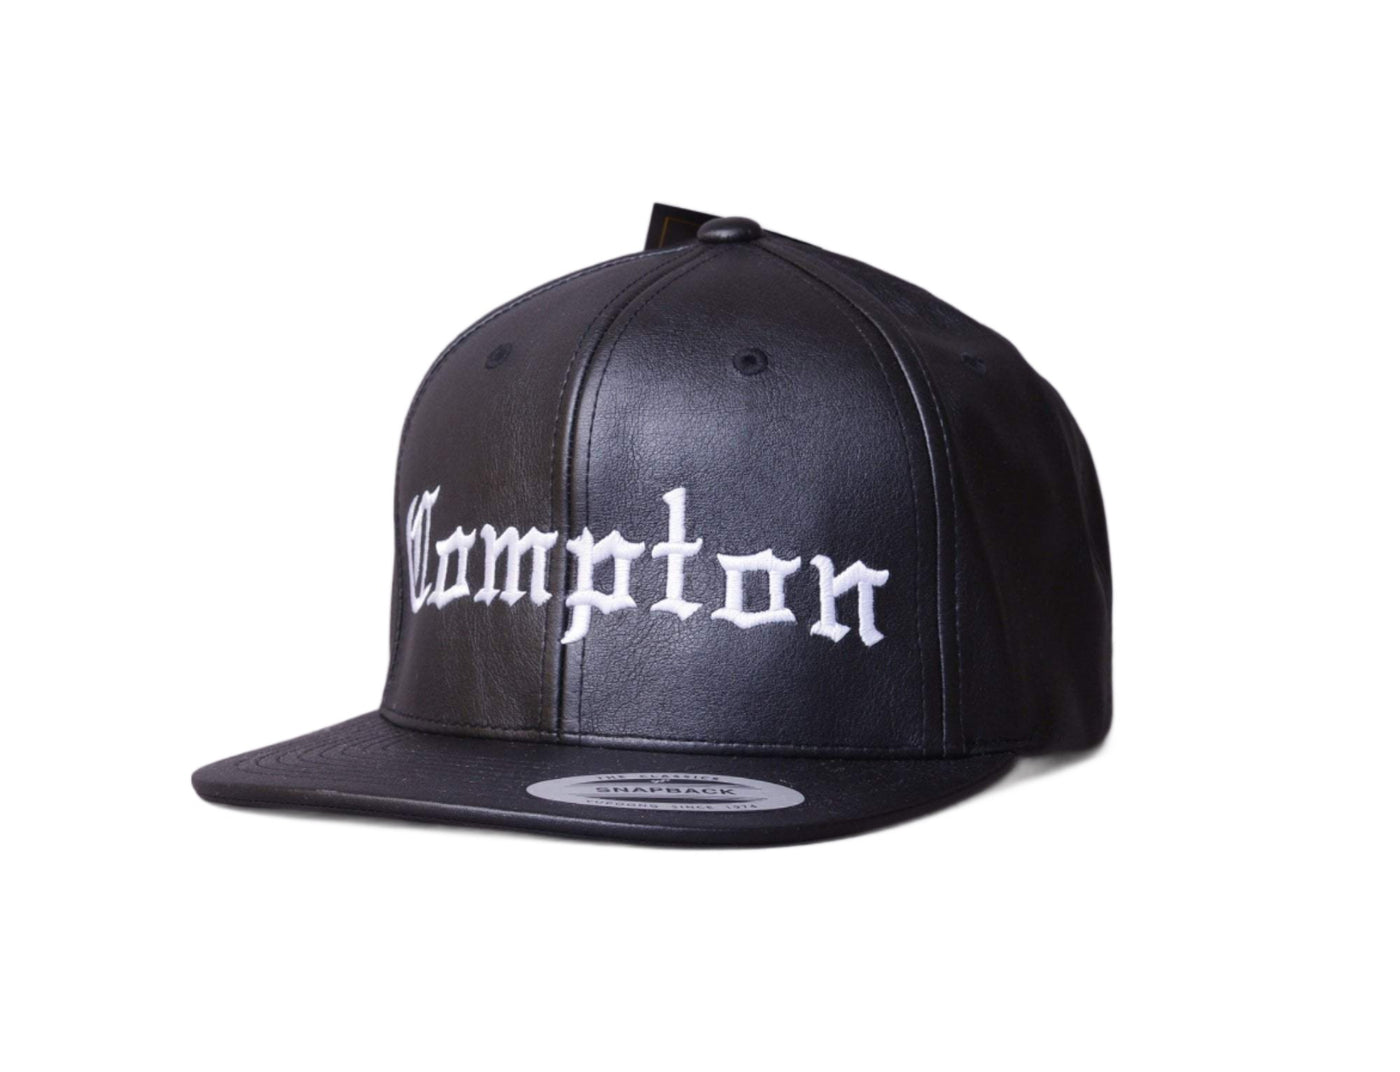 Cap Snapback Compton Black Full "Leather" LOKK Snapback Cap / Black / One Size